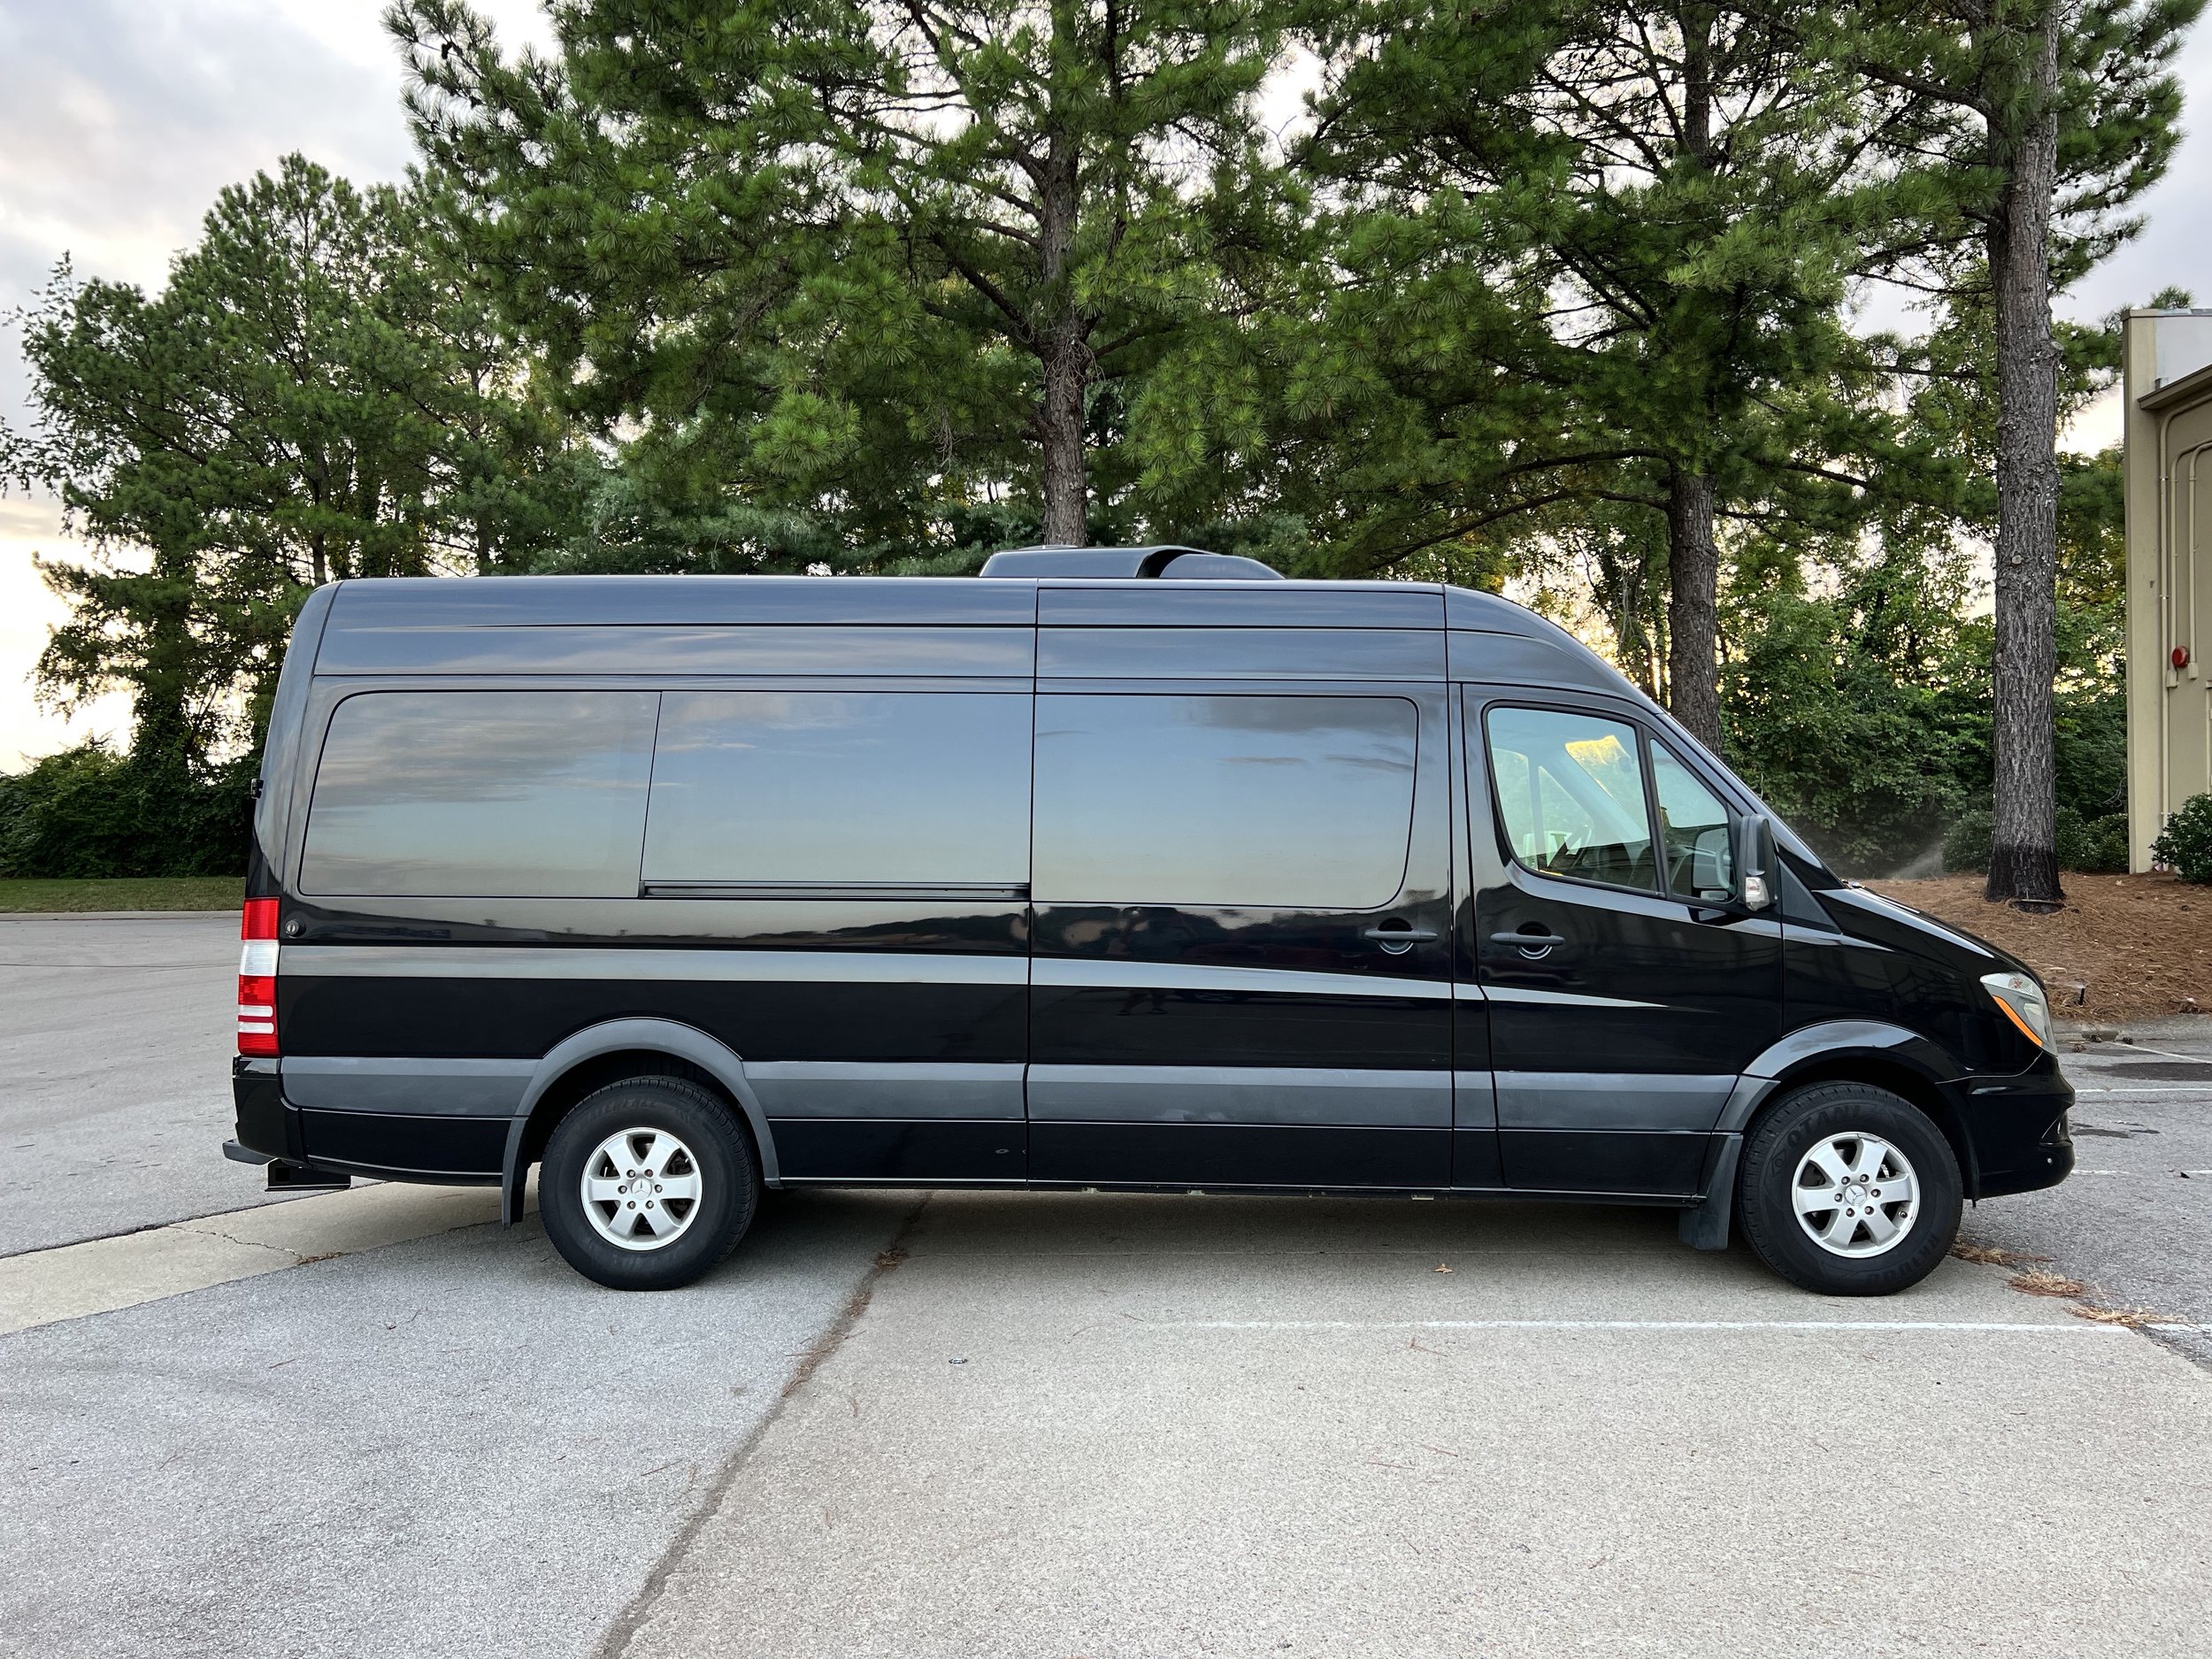 Nashville Vans Rental Agency — Rent the Mercedes Sprinter Roadrunner